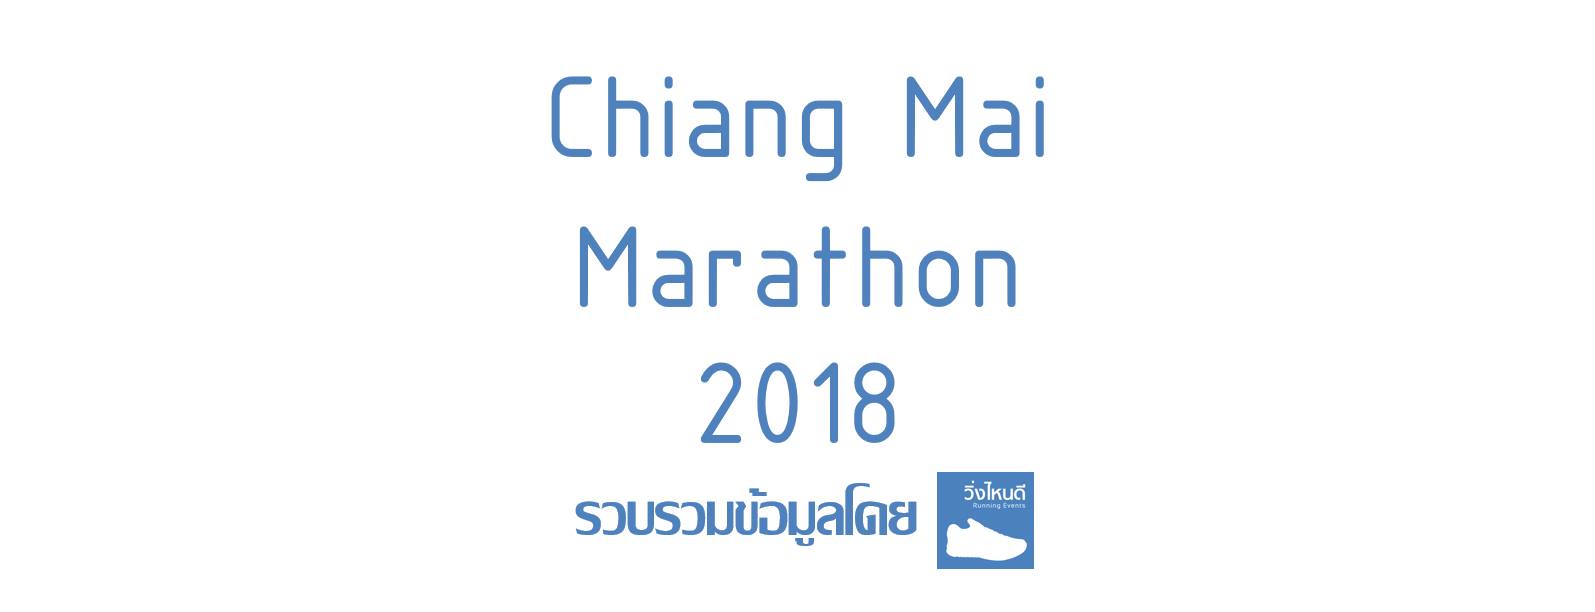 Chiang Mai Marathon 2018